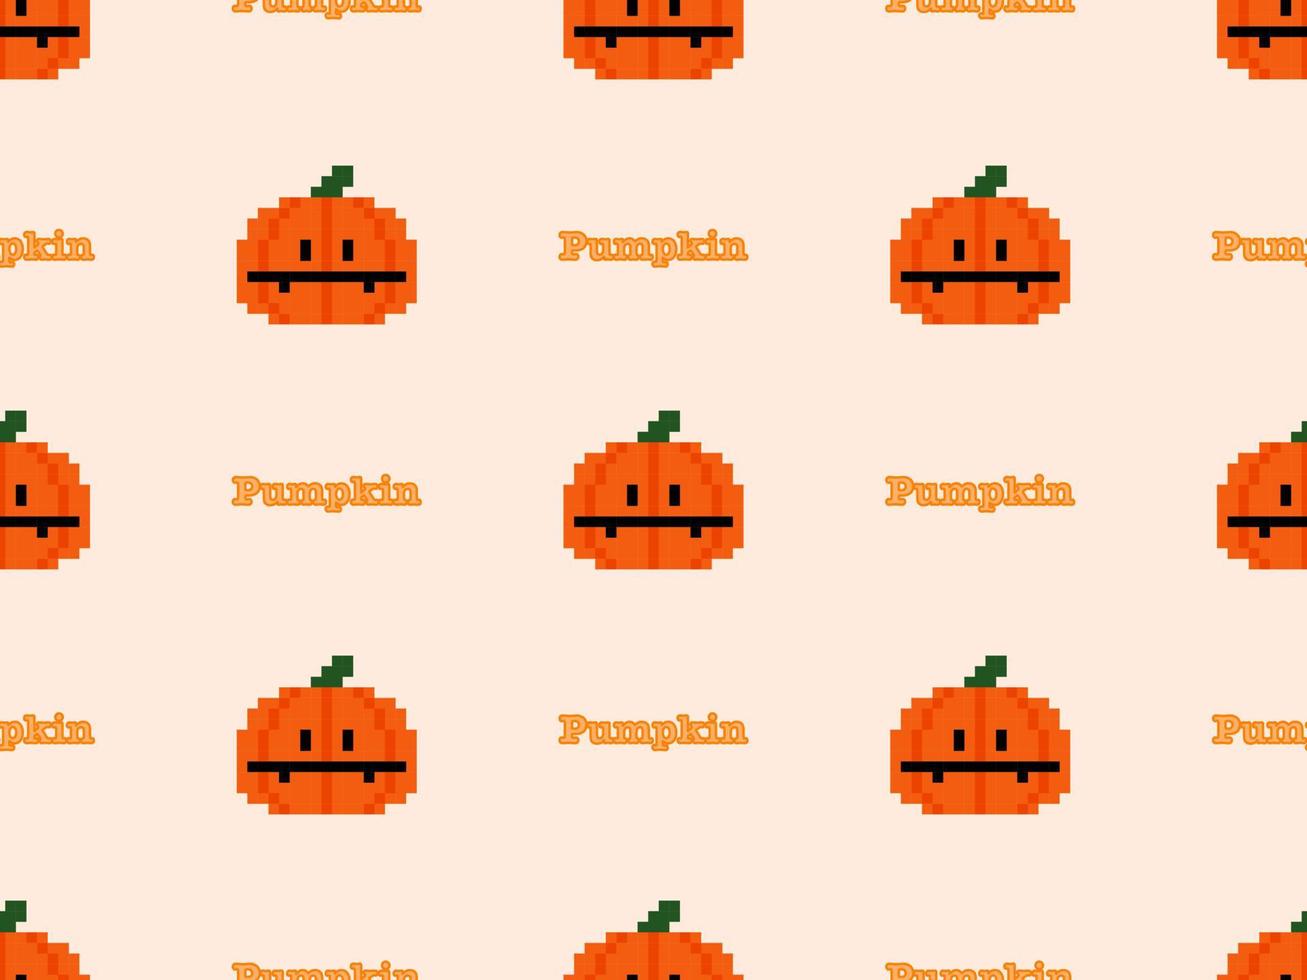 Pumpkin cartoon character seamless pattern on orange background. Pixel style vector